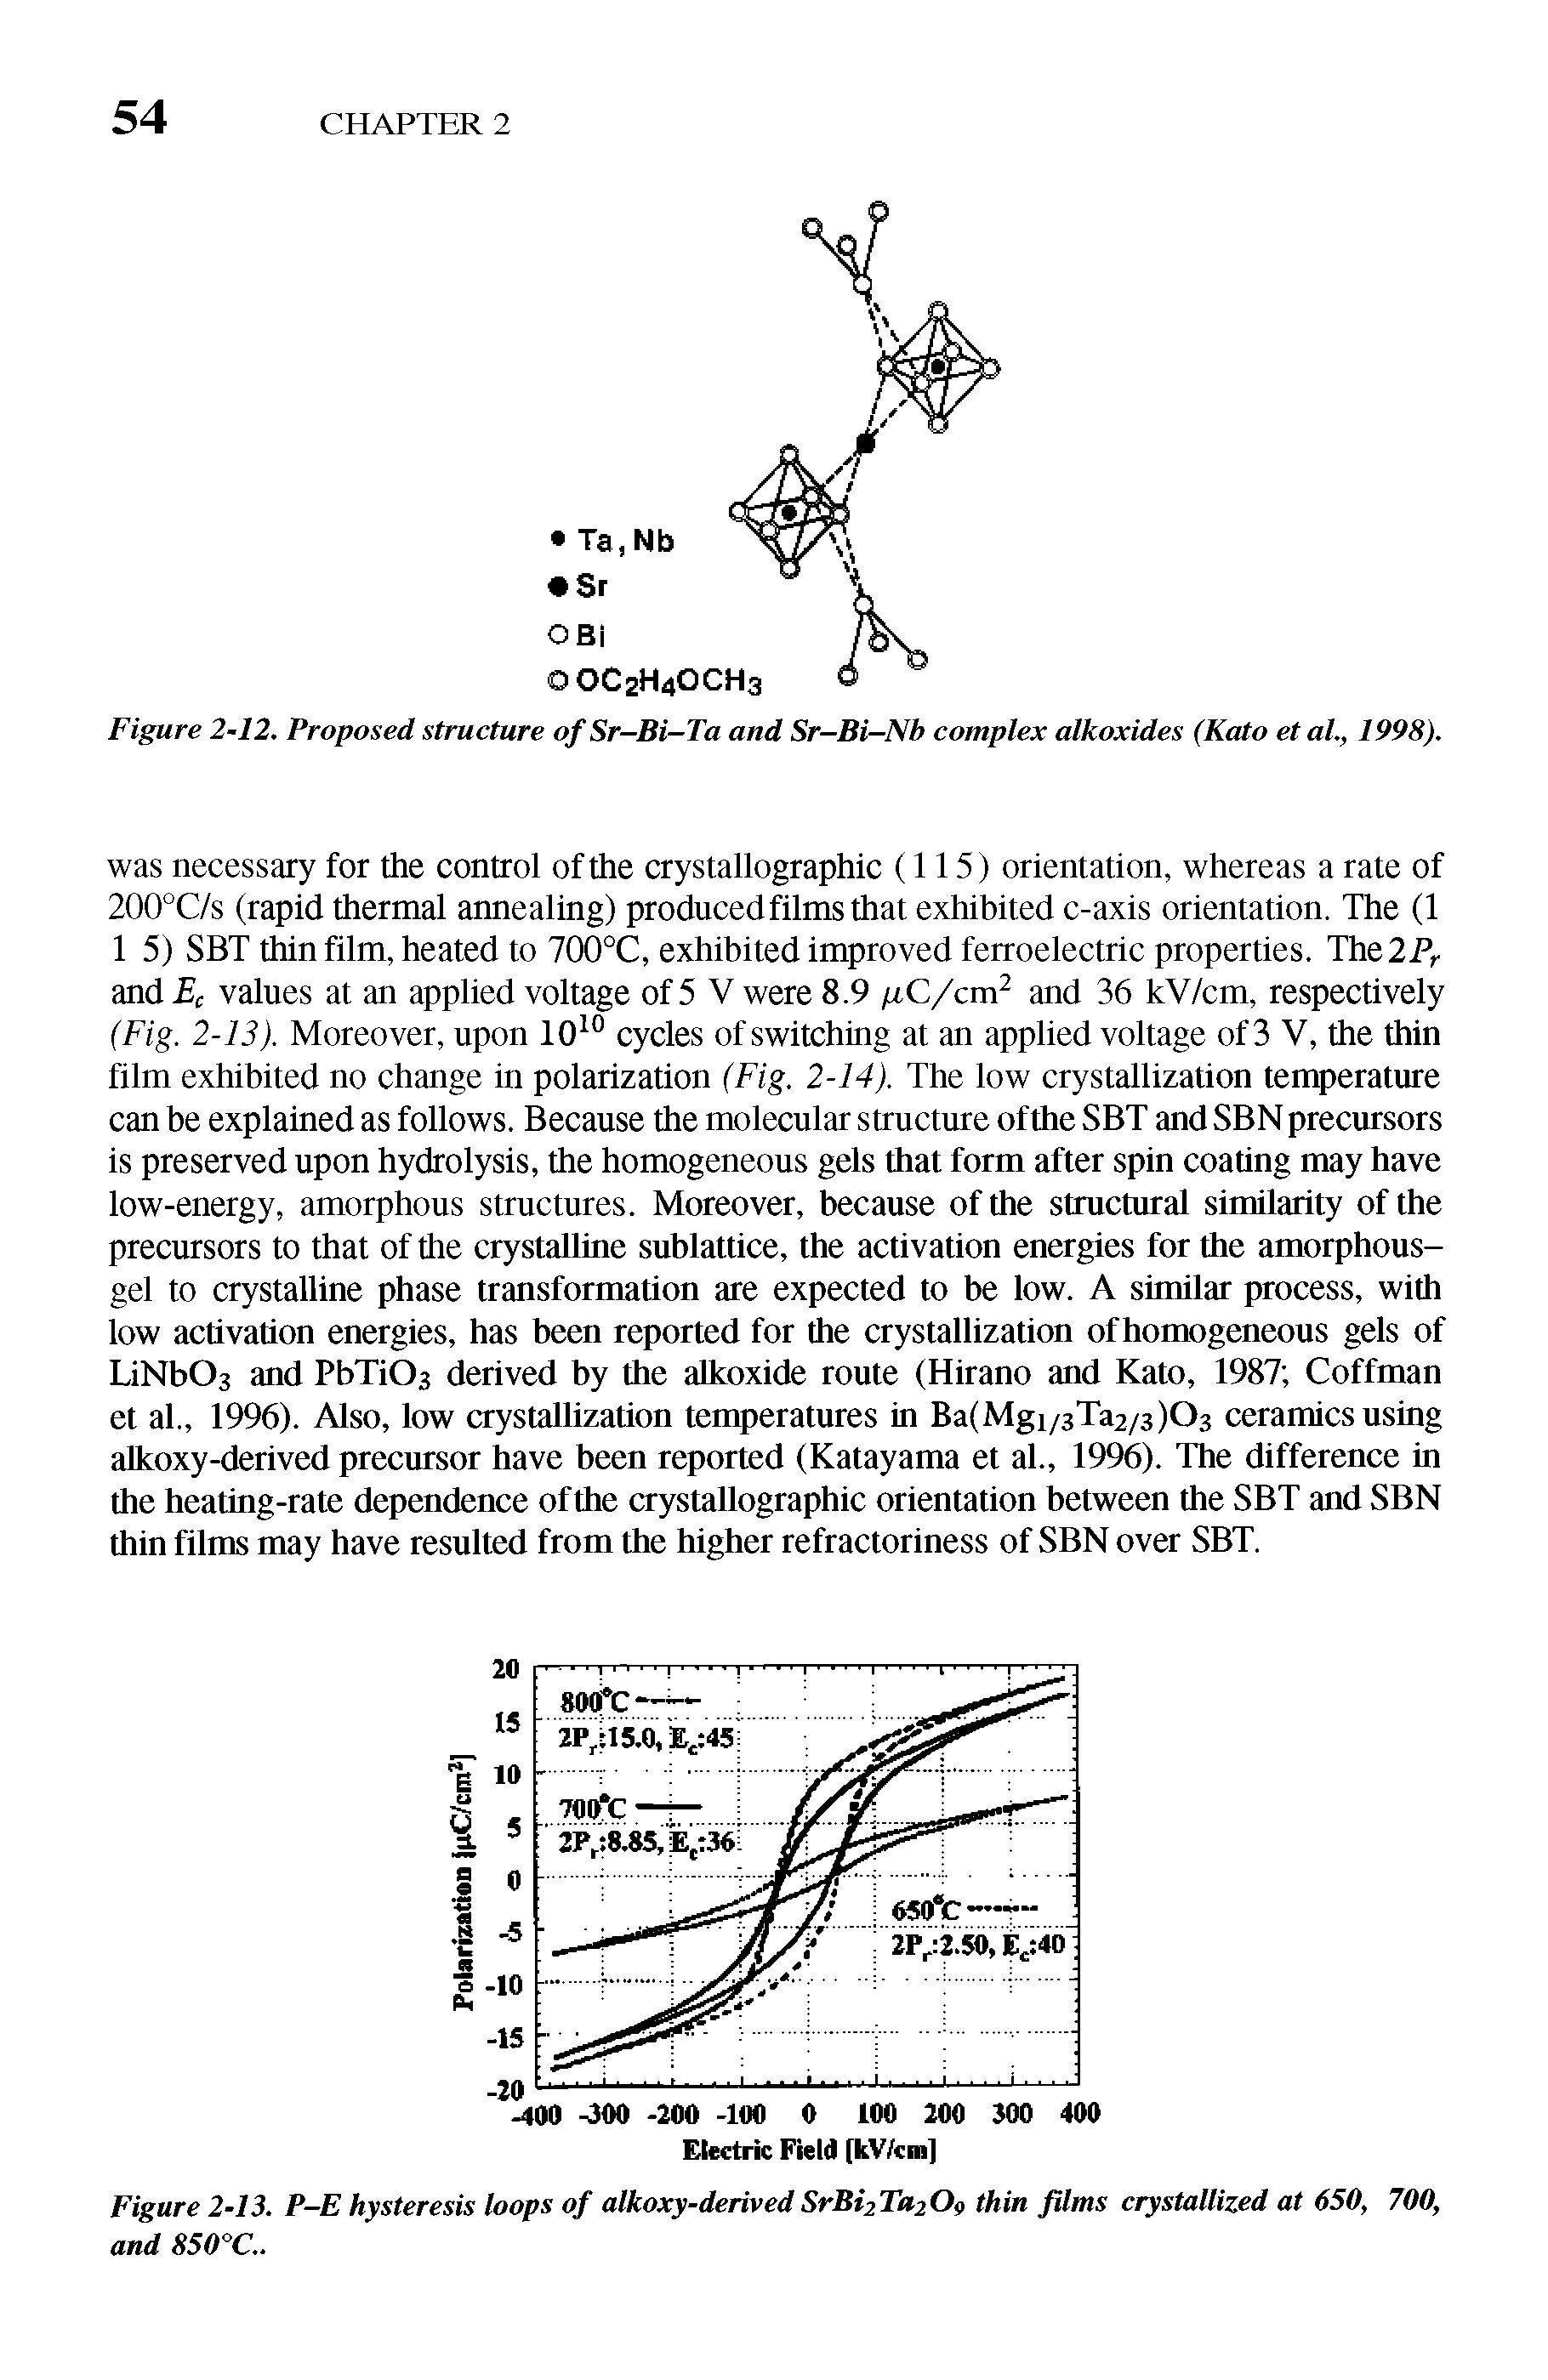 Figure 2-12. Proposed structure of Sr-Bi-Ta and Sr-Bi-Nb complex alkoxides (Koto et al., 1998).